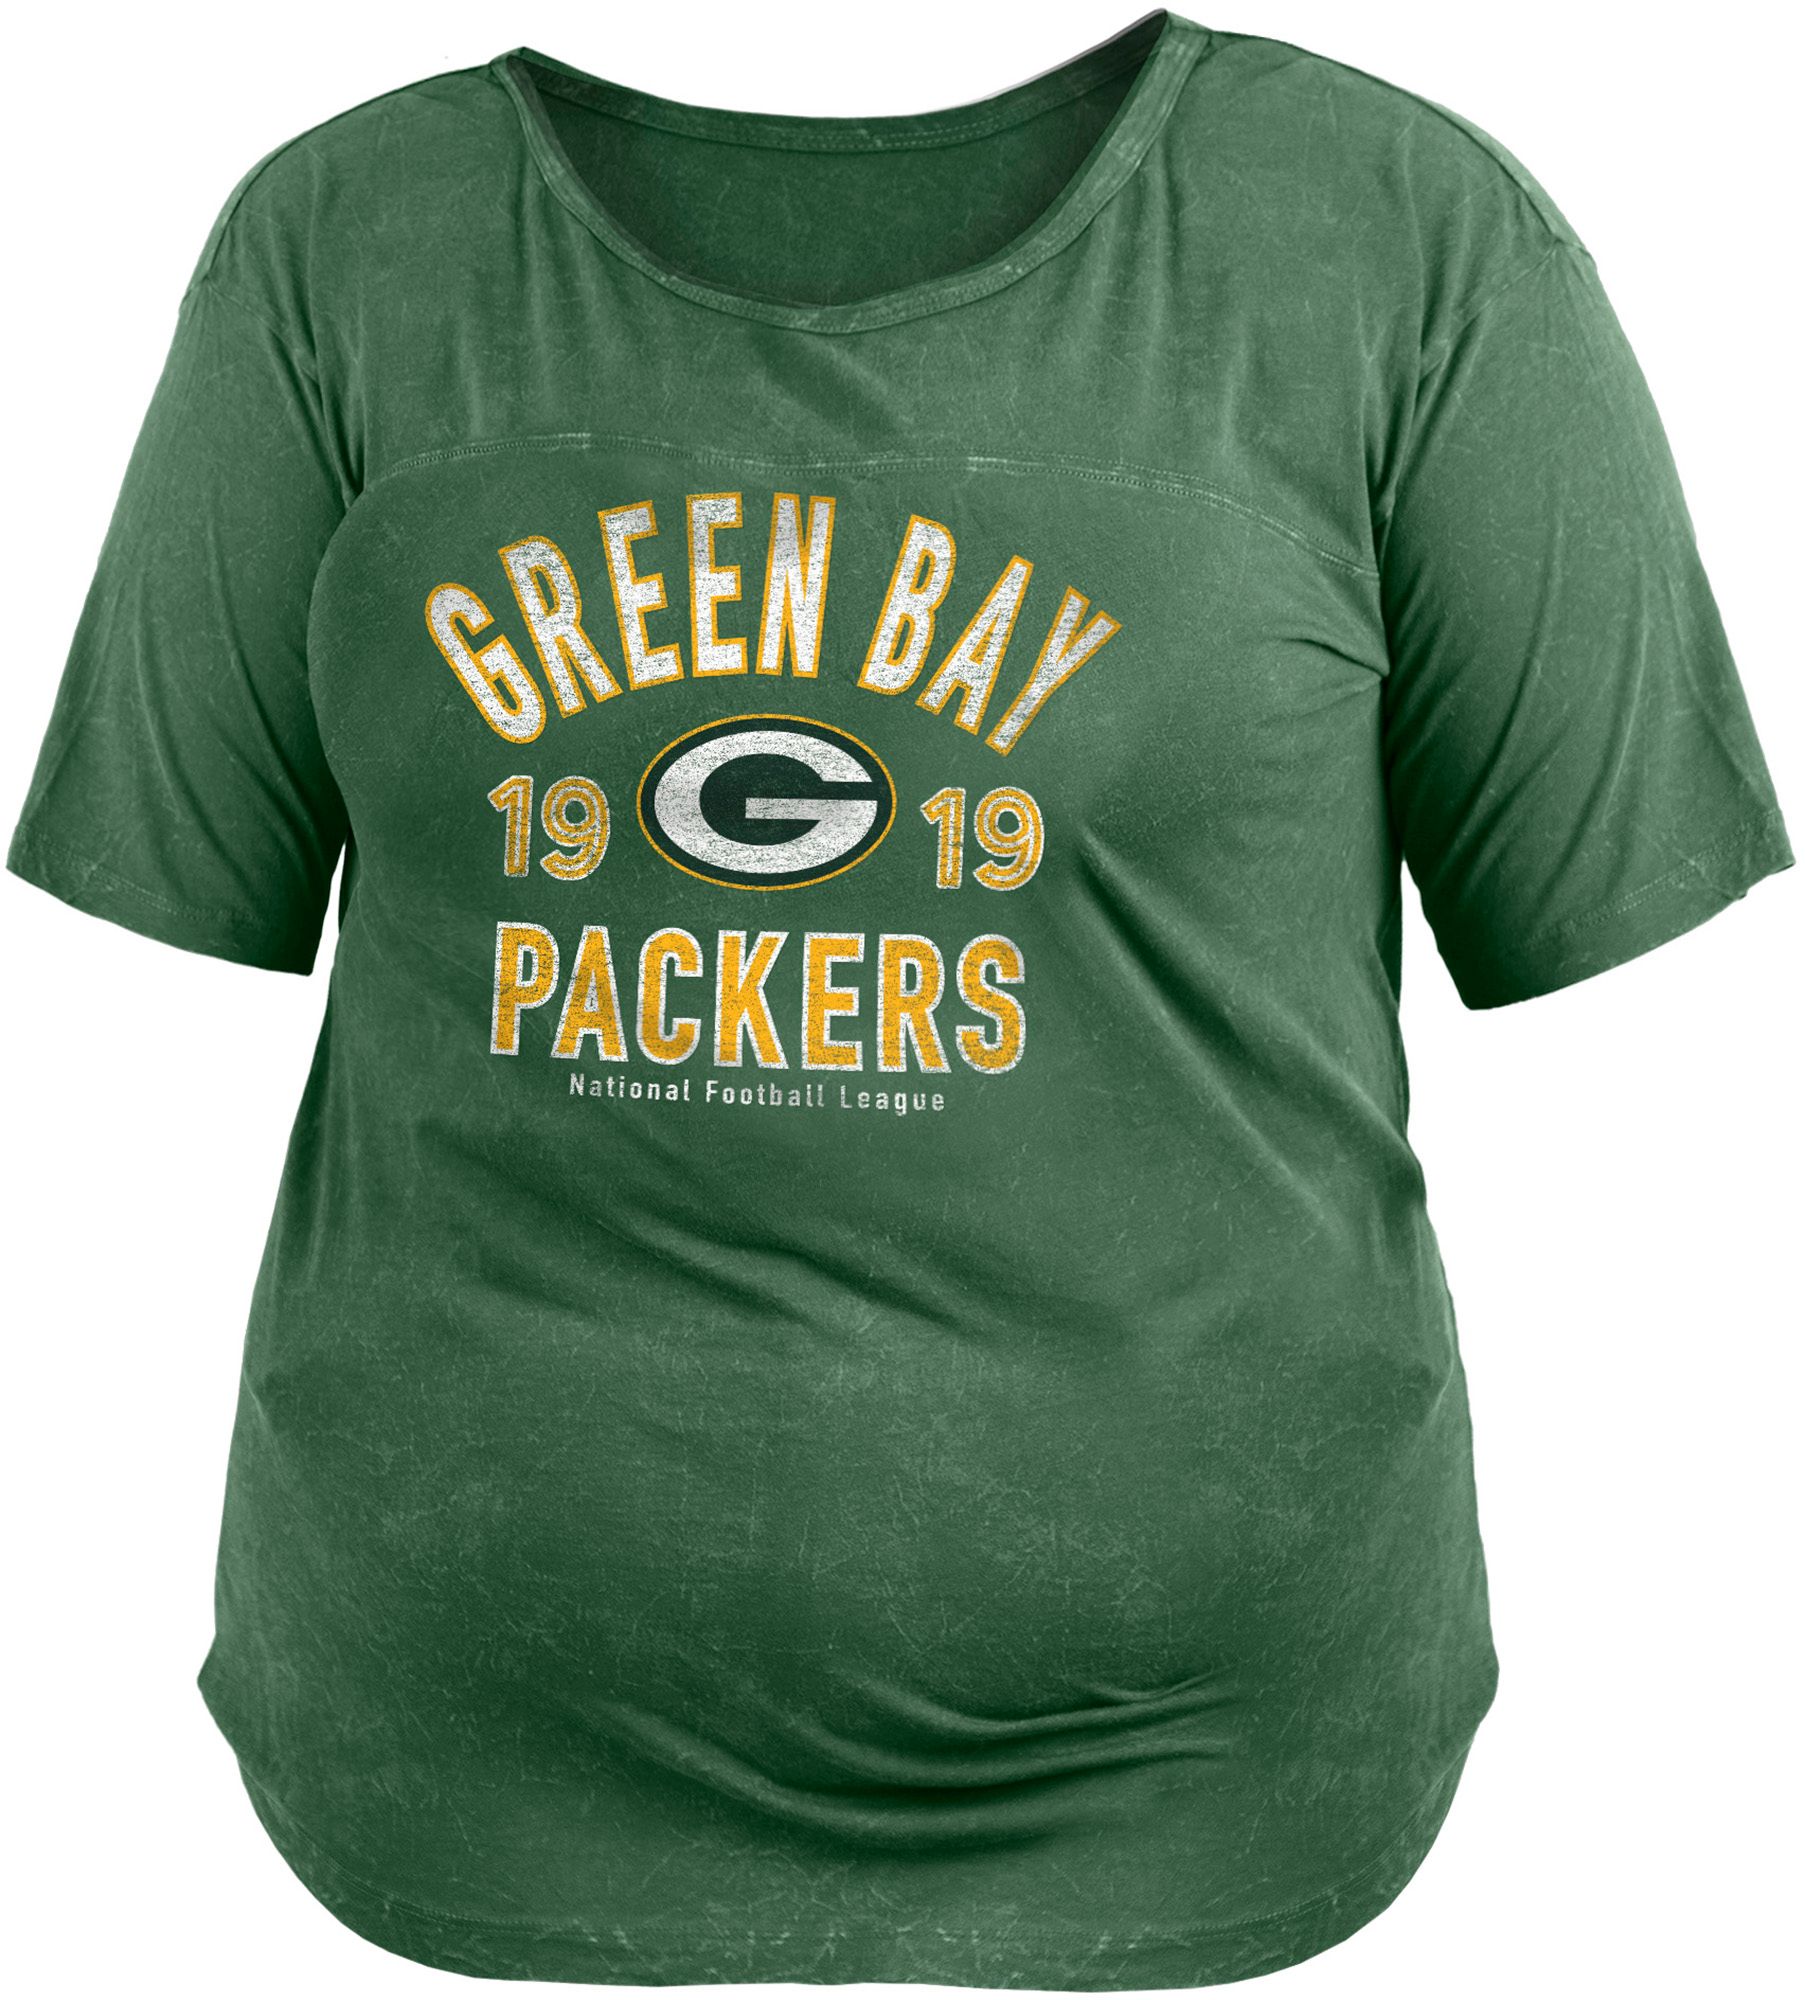 New Era / Women's Green Bay Packers Mineral Green Plus Size T-Shirt